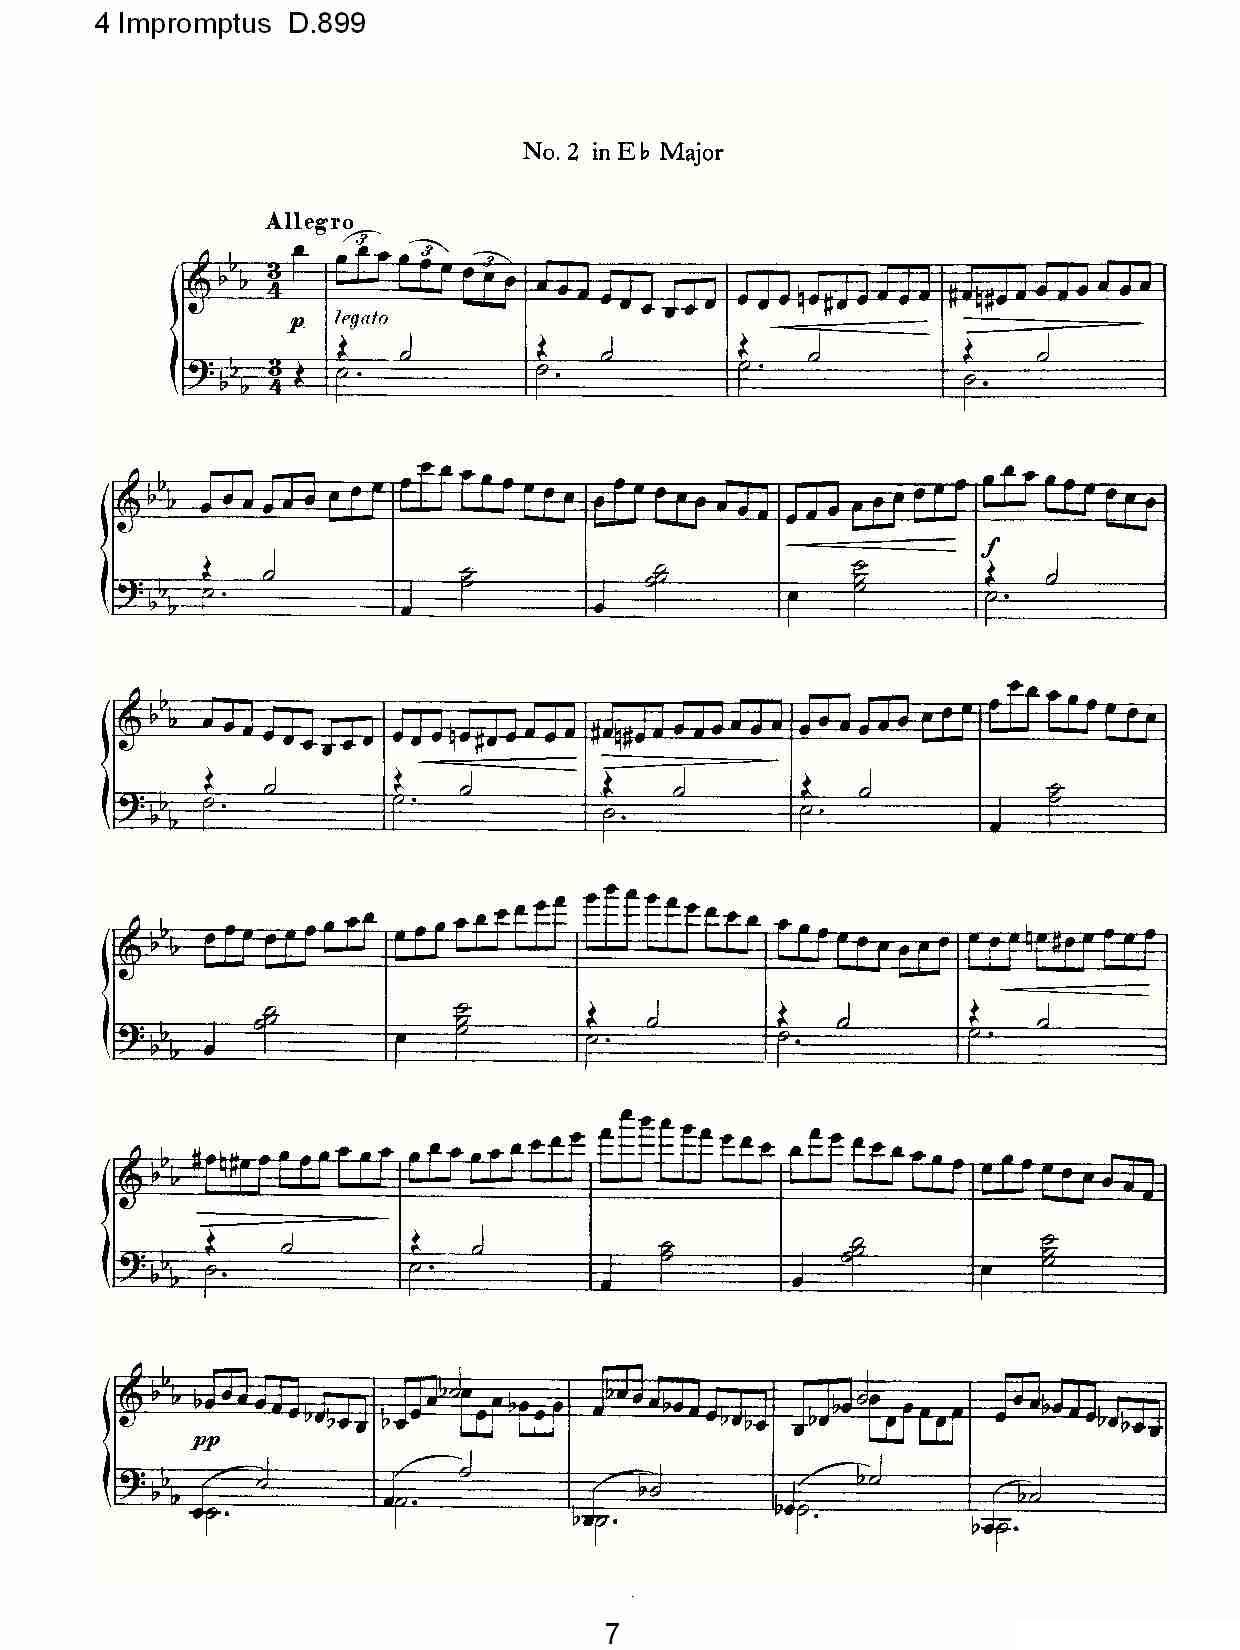 4 Impromptus D.899（4人即兴演奏 D.899）钢琴曲谱（图7）